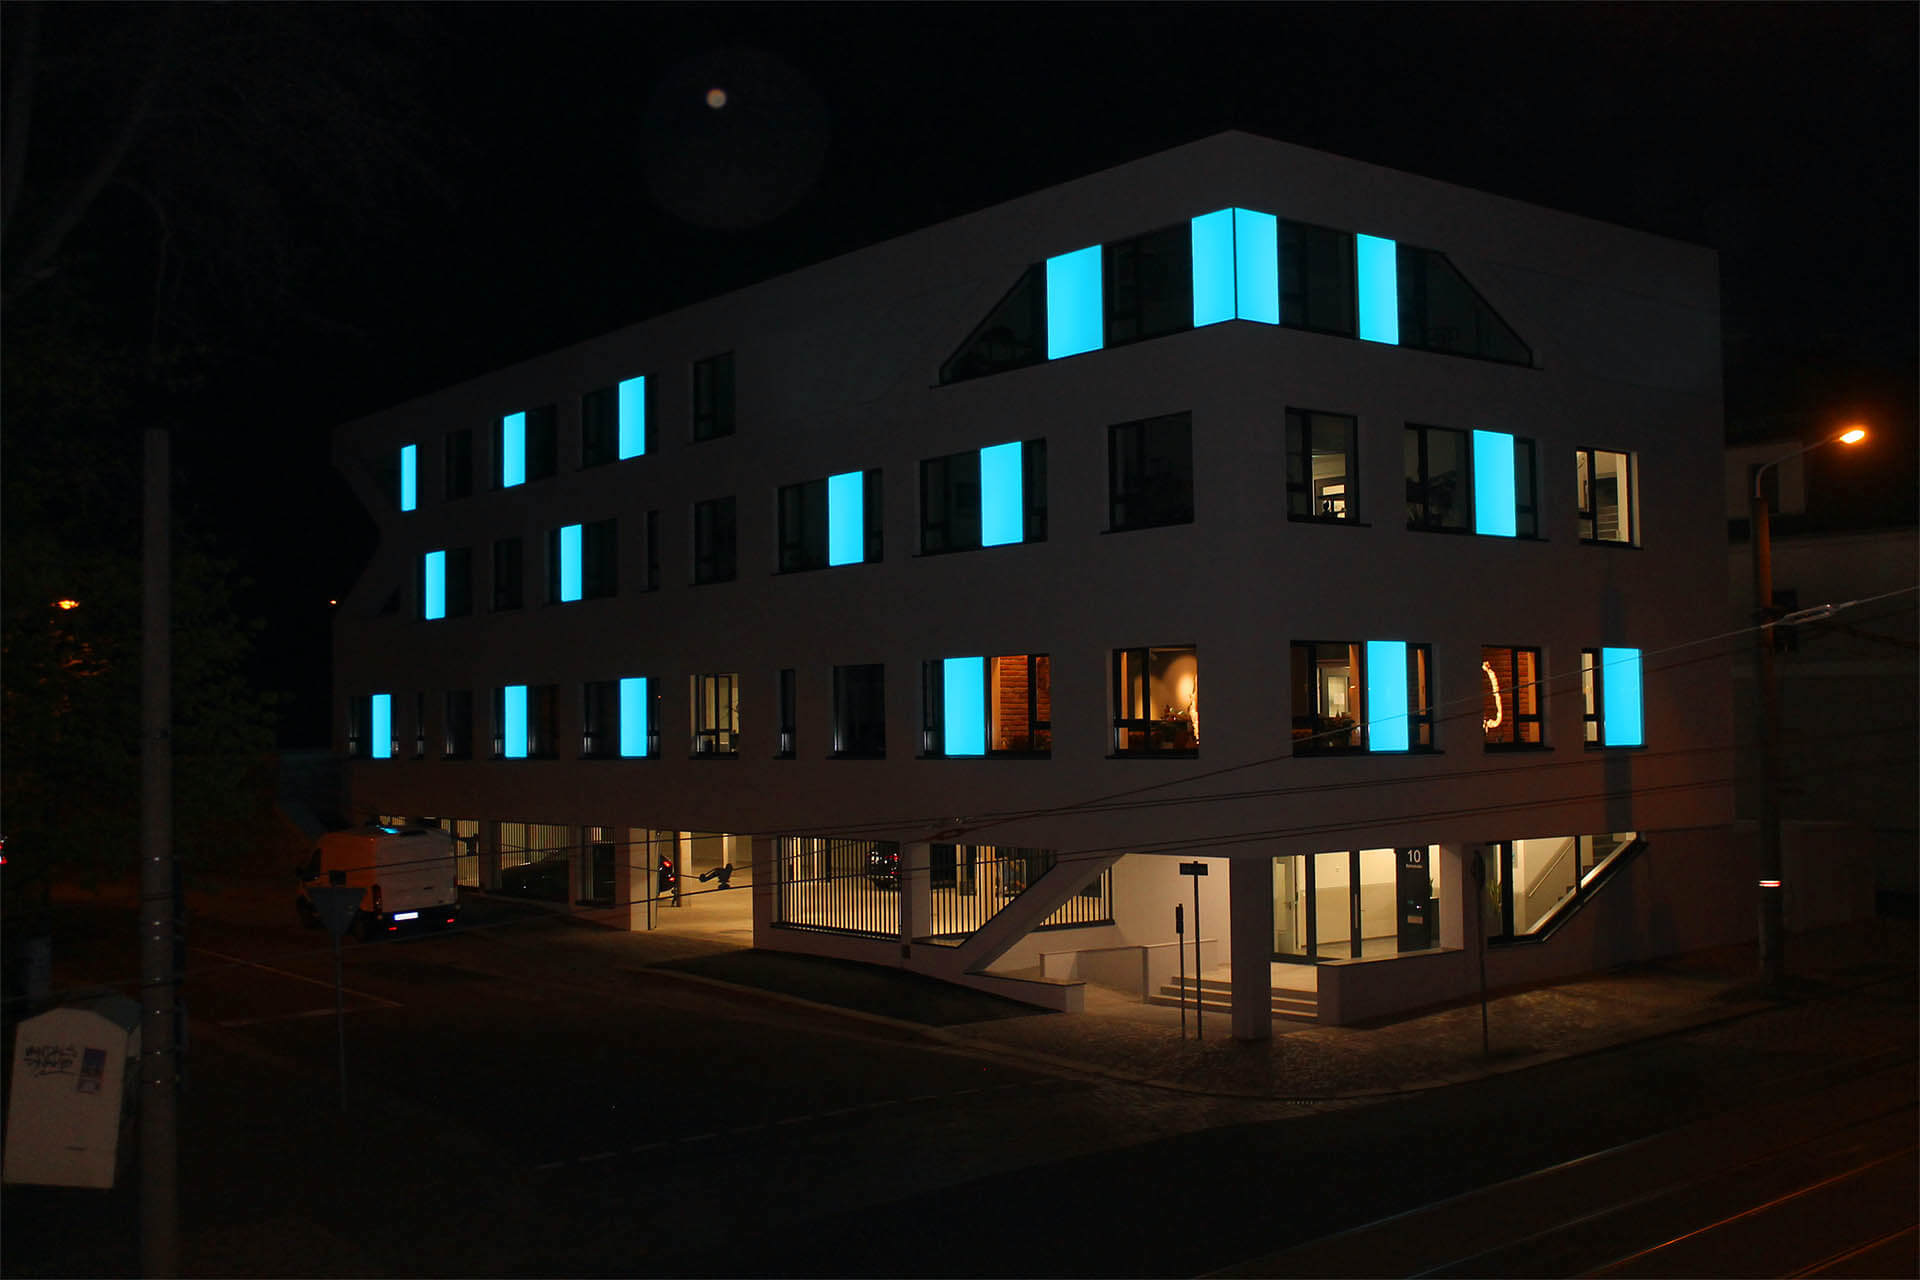 Partielle LED Fassadenbeleuchtung bei Nacht; led facade illumination with light blue led-panels